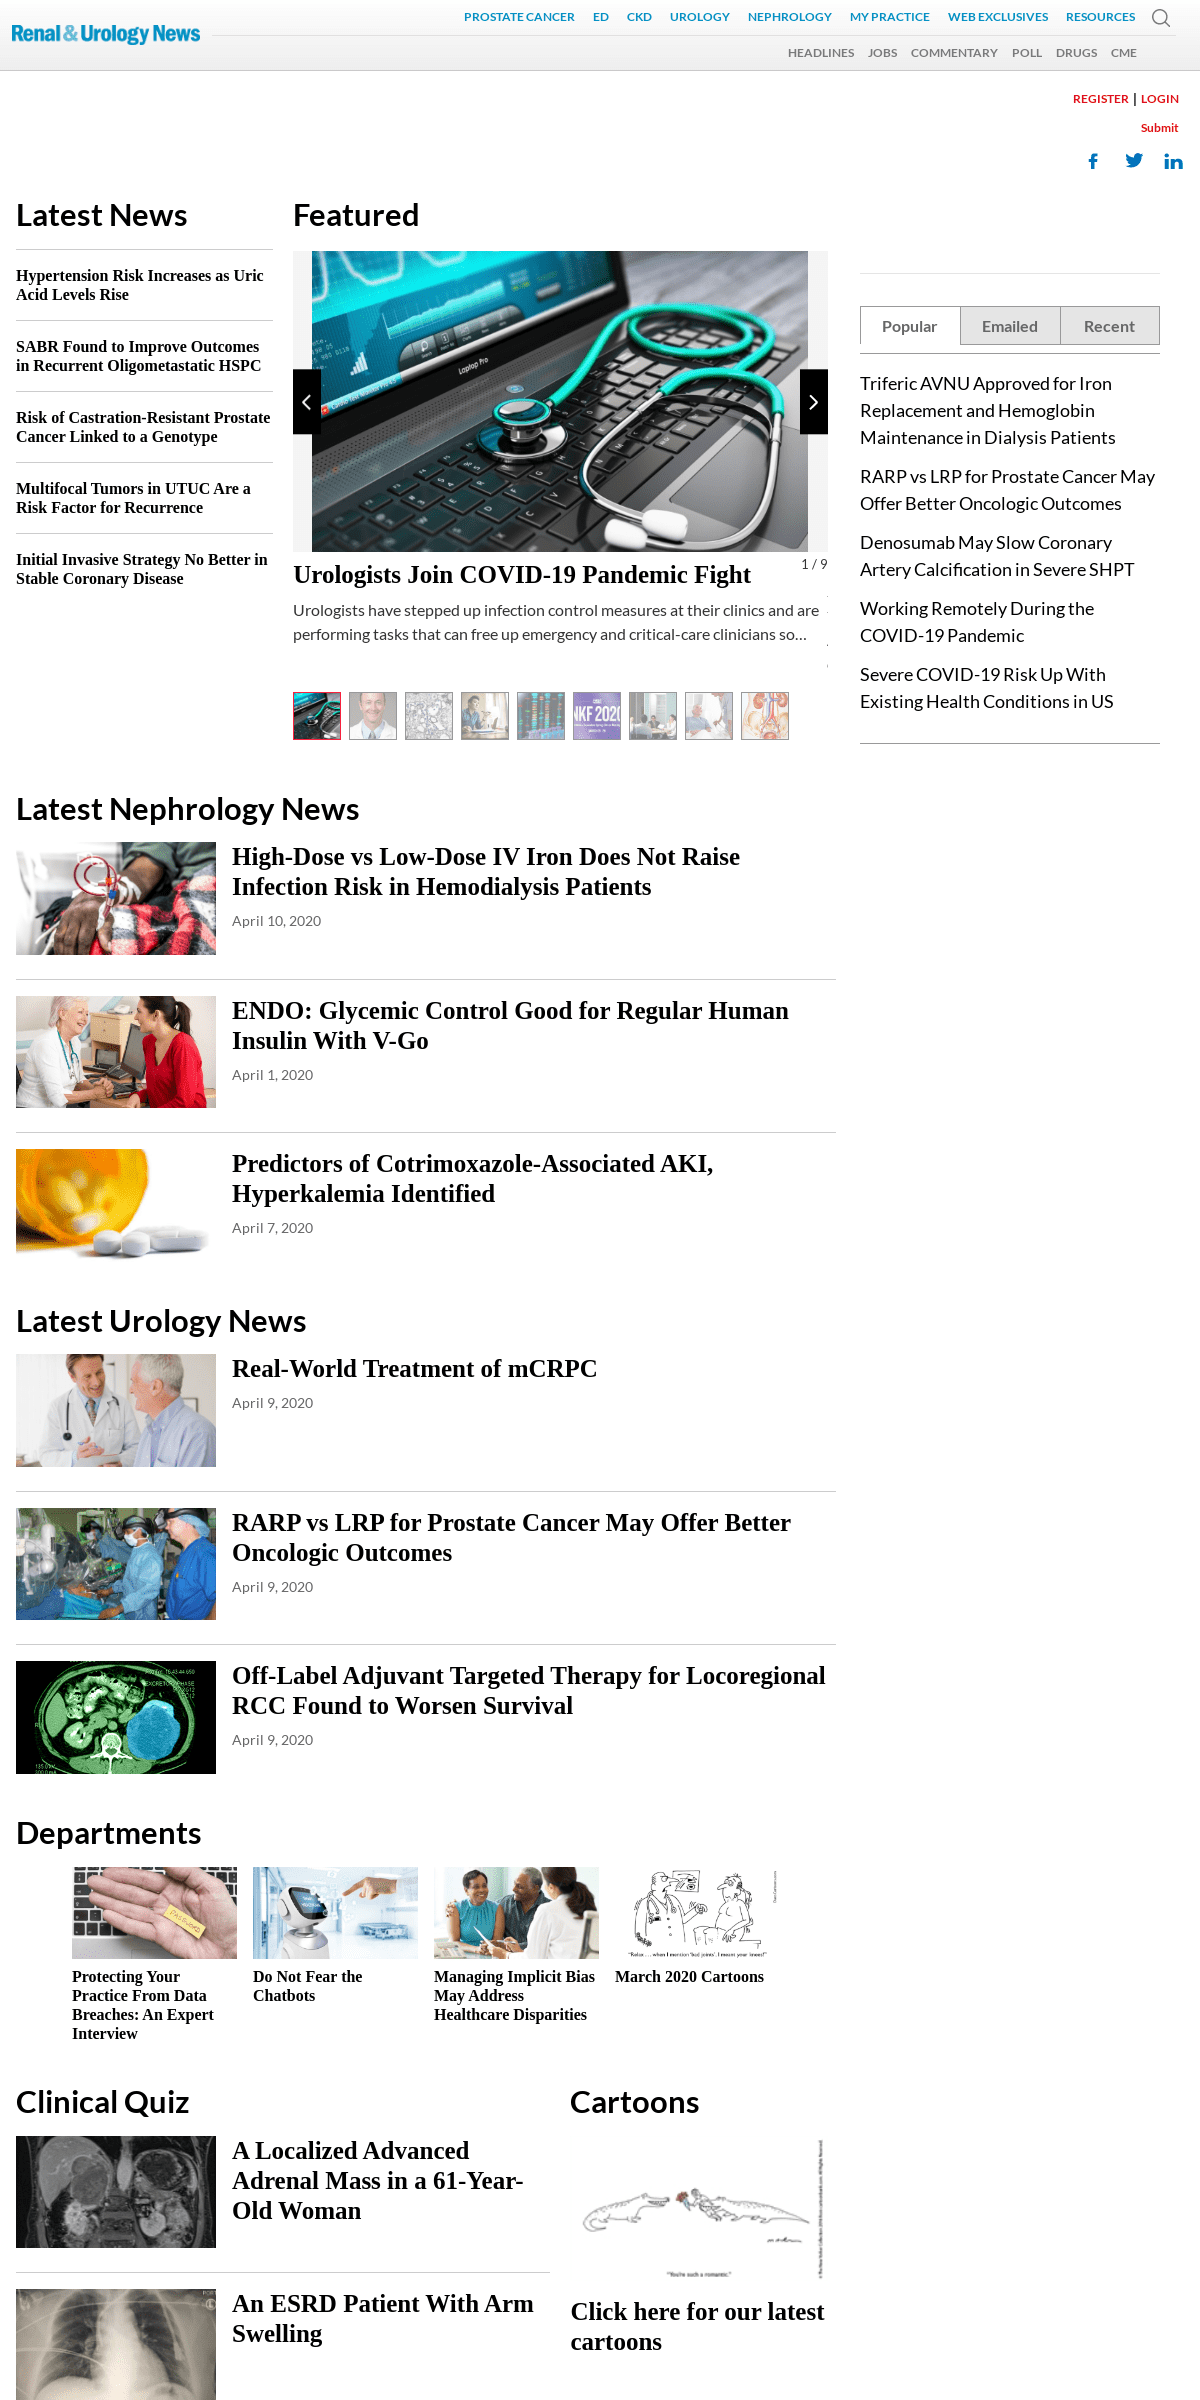 A complete backup of renalandurologynews.com